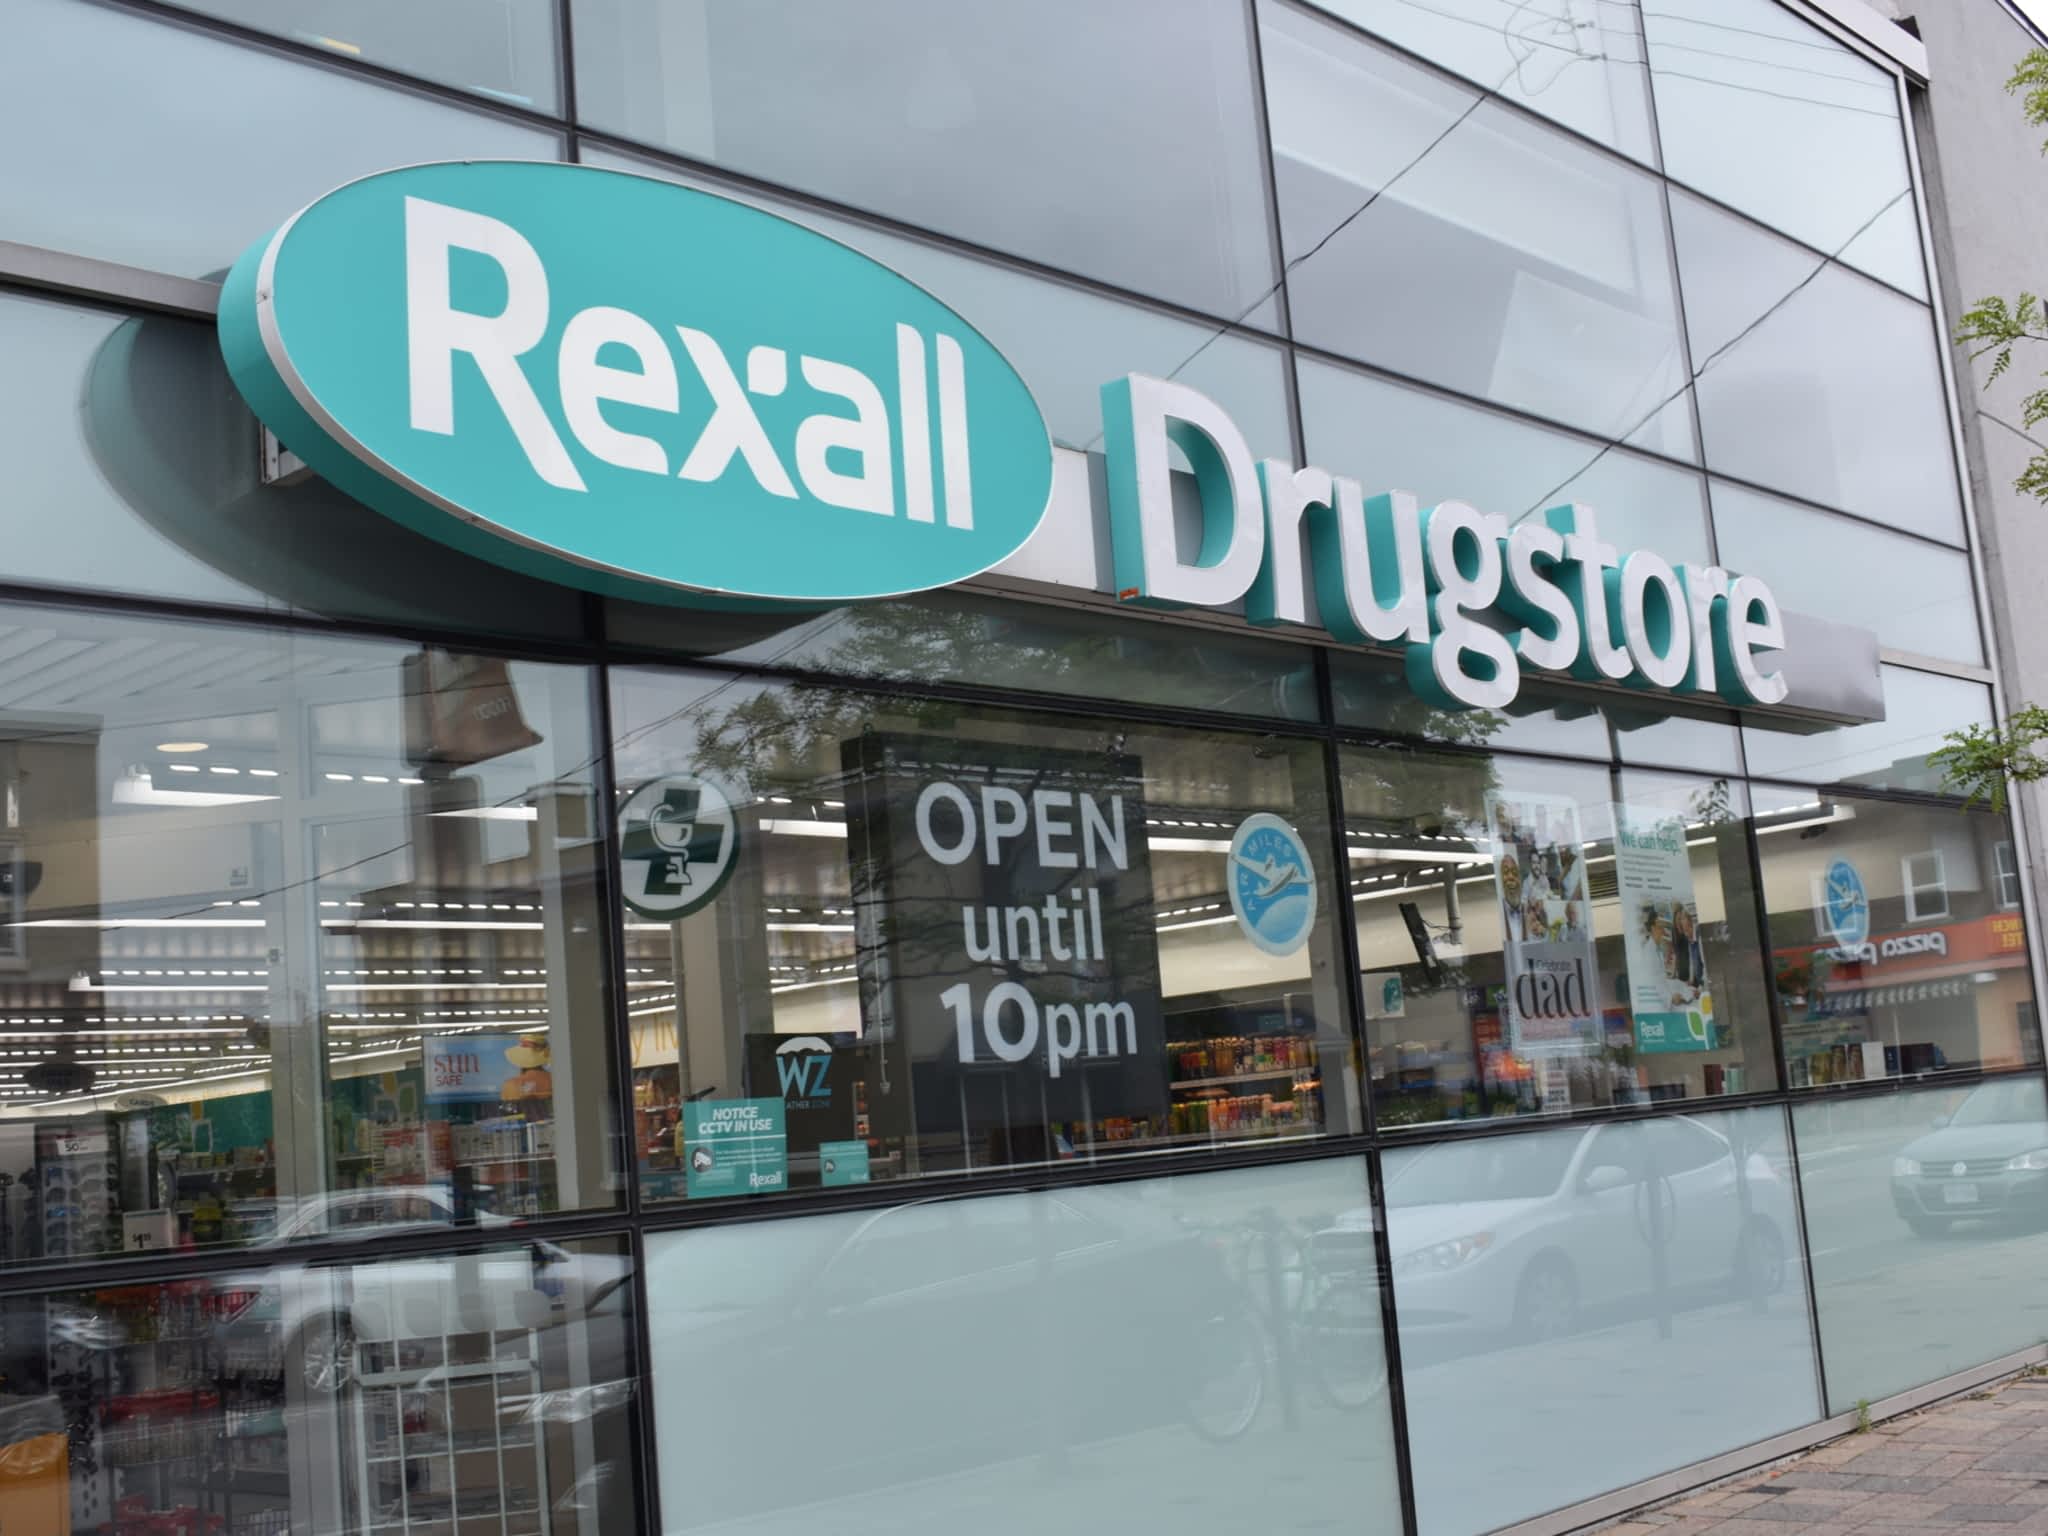 photo Rexall Drugstore